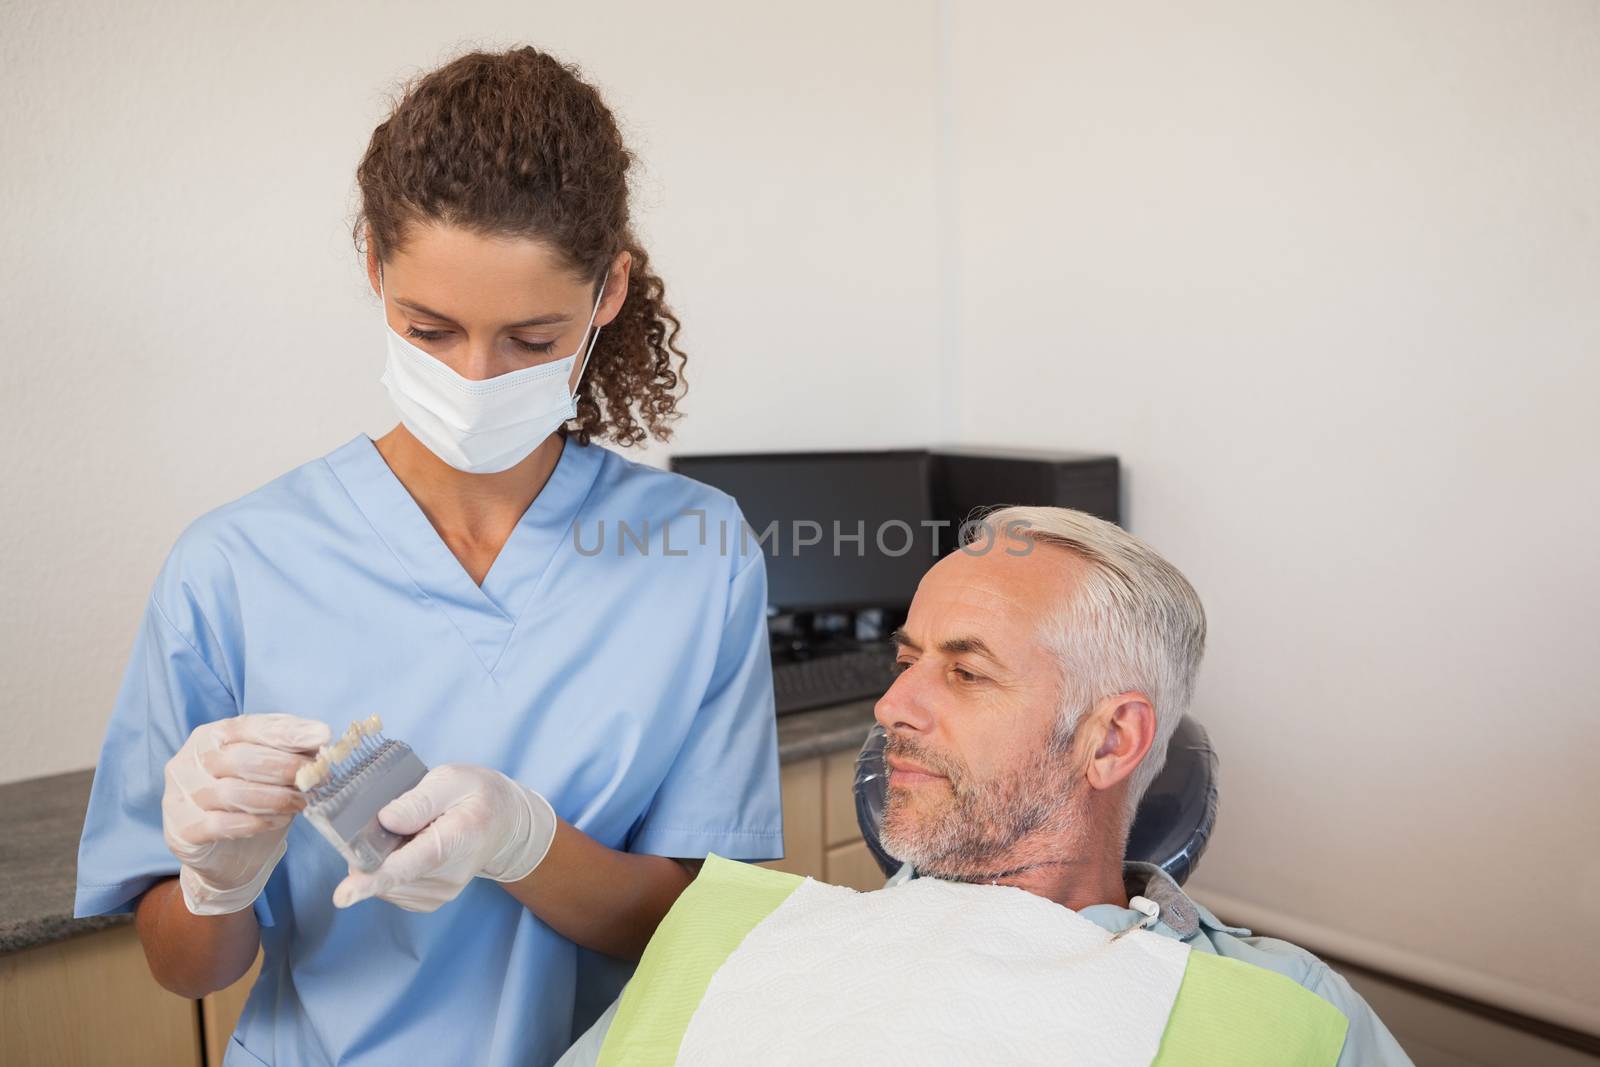 Dentist showing patient model of teeth by Wavebreakmedia